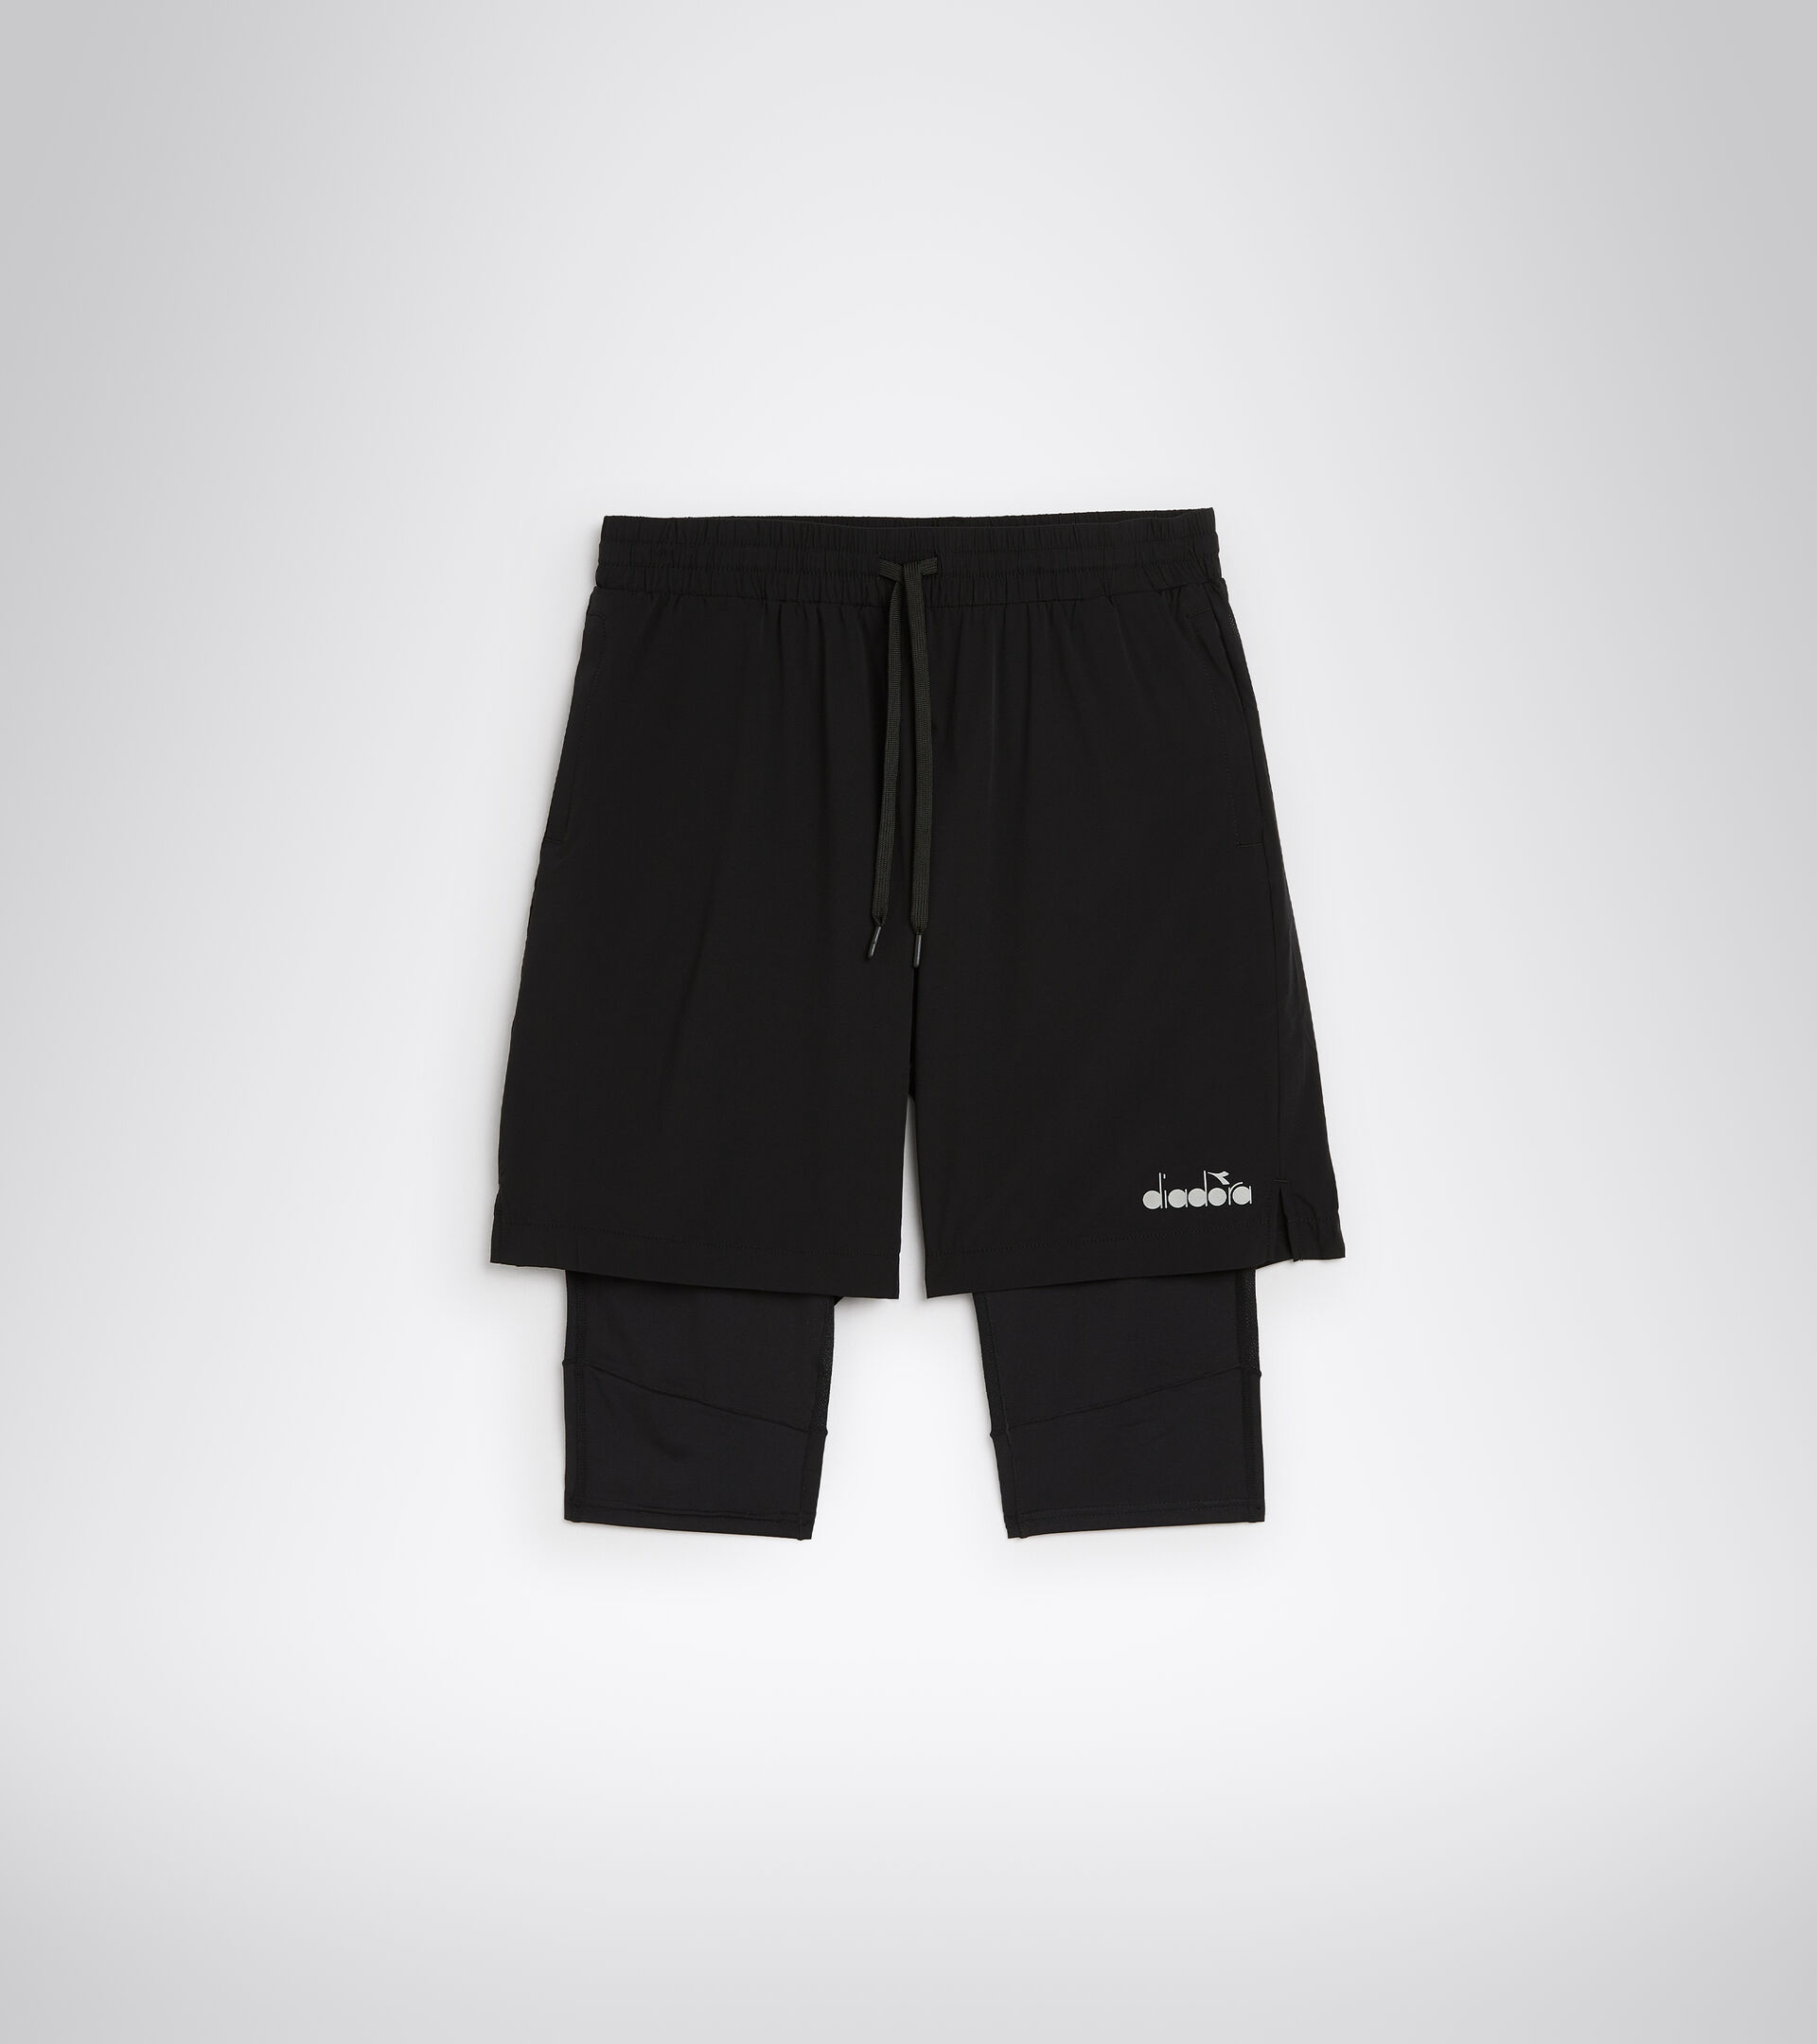 POWER SHORTS BE running - ONE Online with shorts Leggings - Diadora GR Store set Men detachable